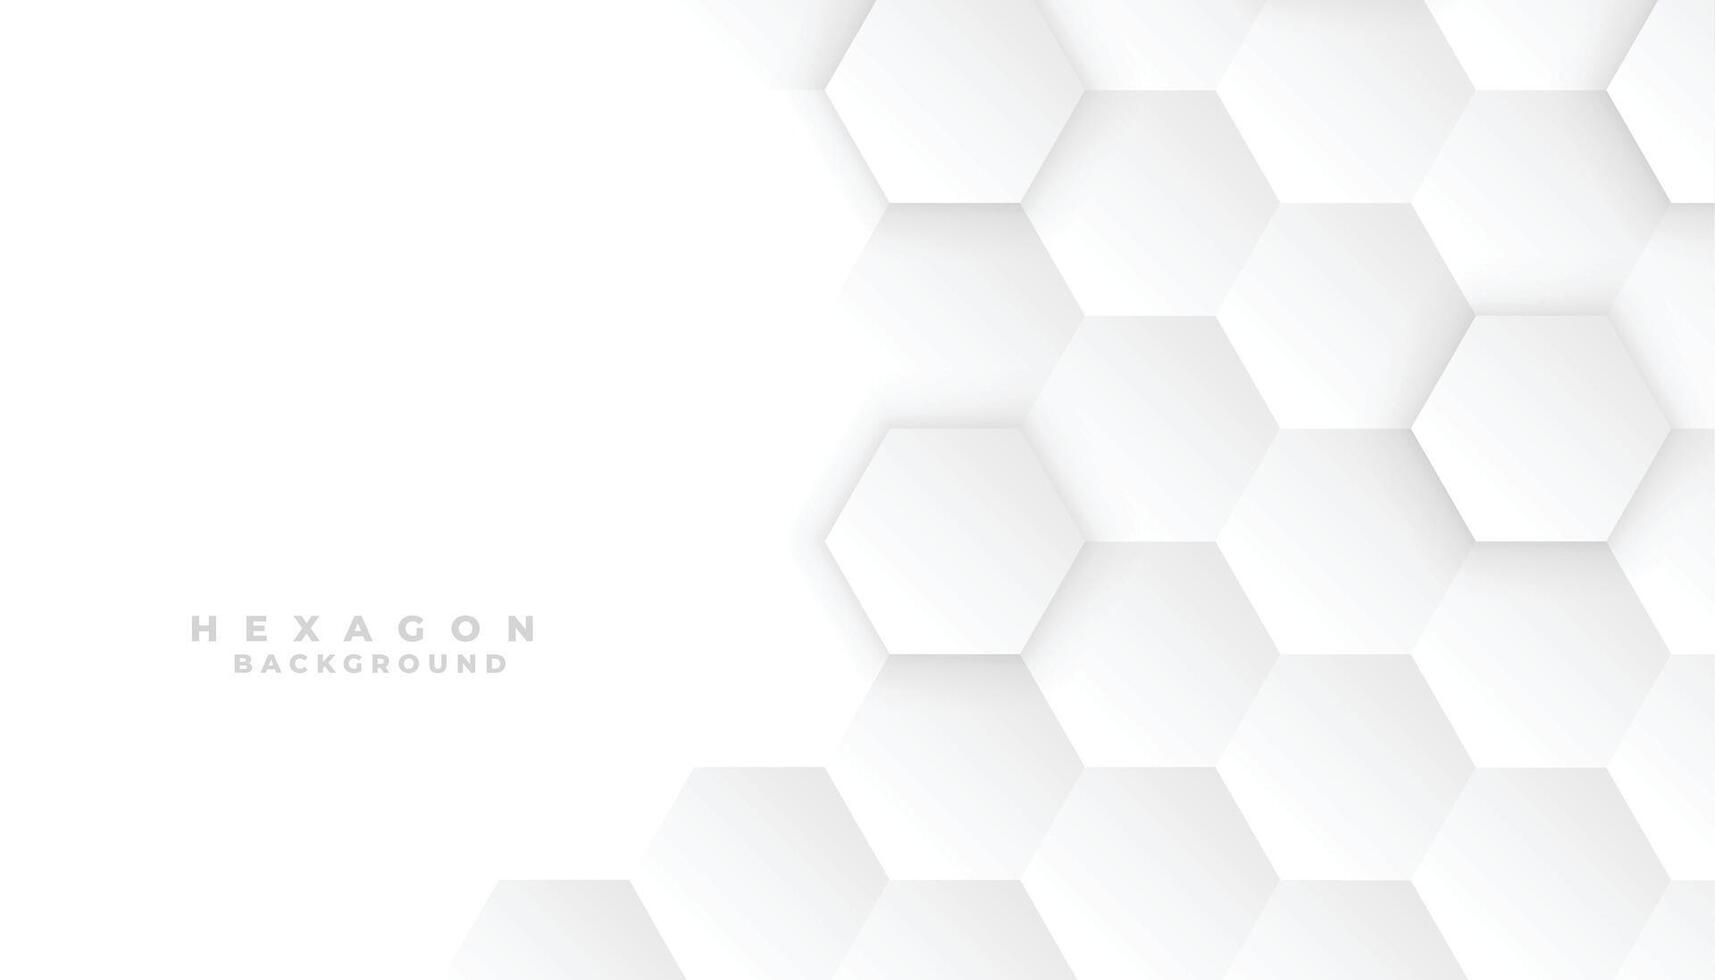 3d style modern hexagonal pattern white background for business backdrop vector